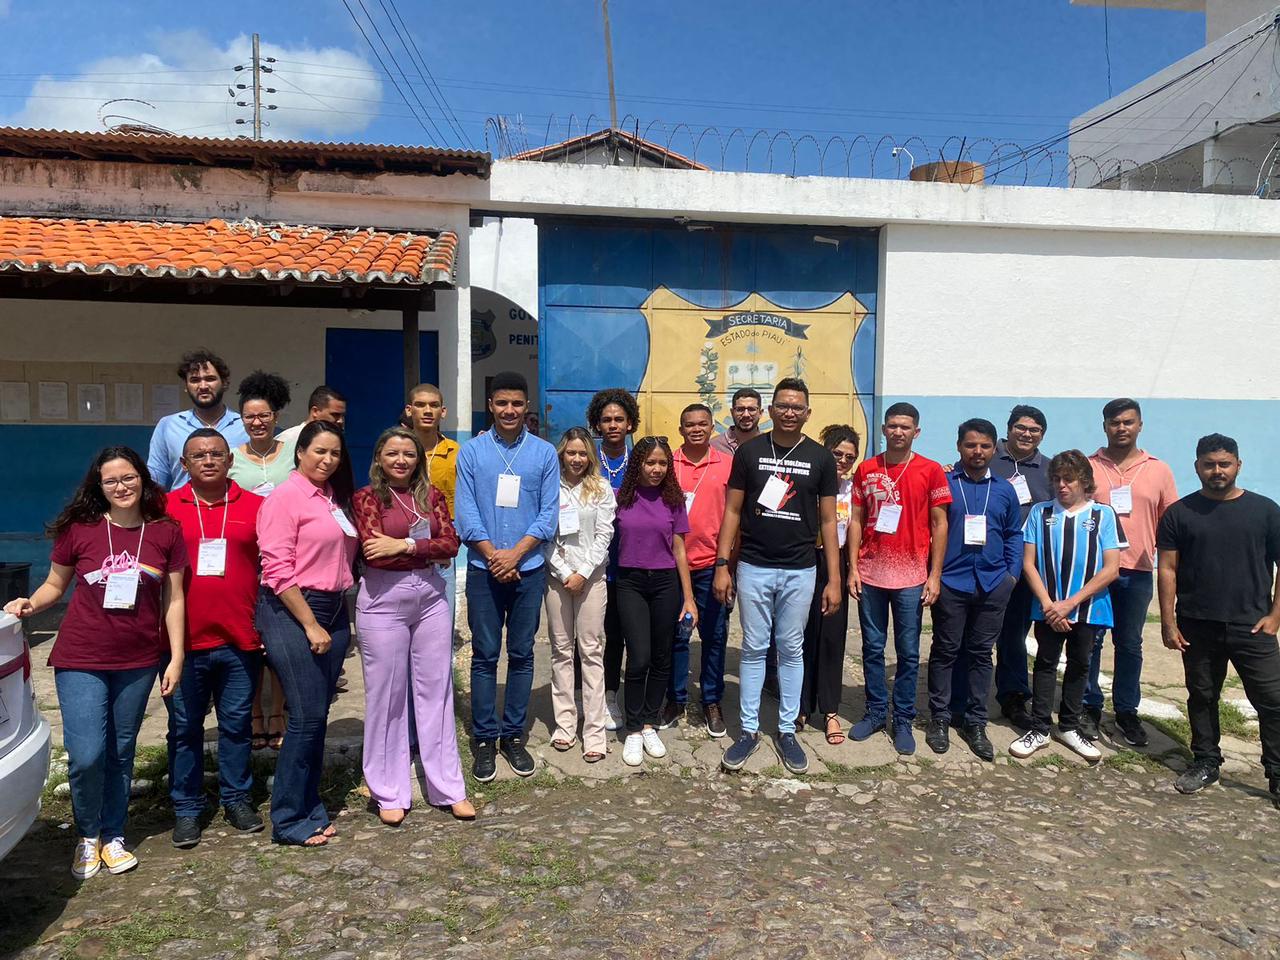 Conselho das juventude do Piauí visita penitenciária de Parnaíba